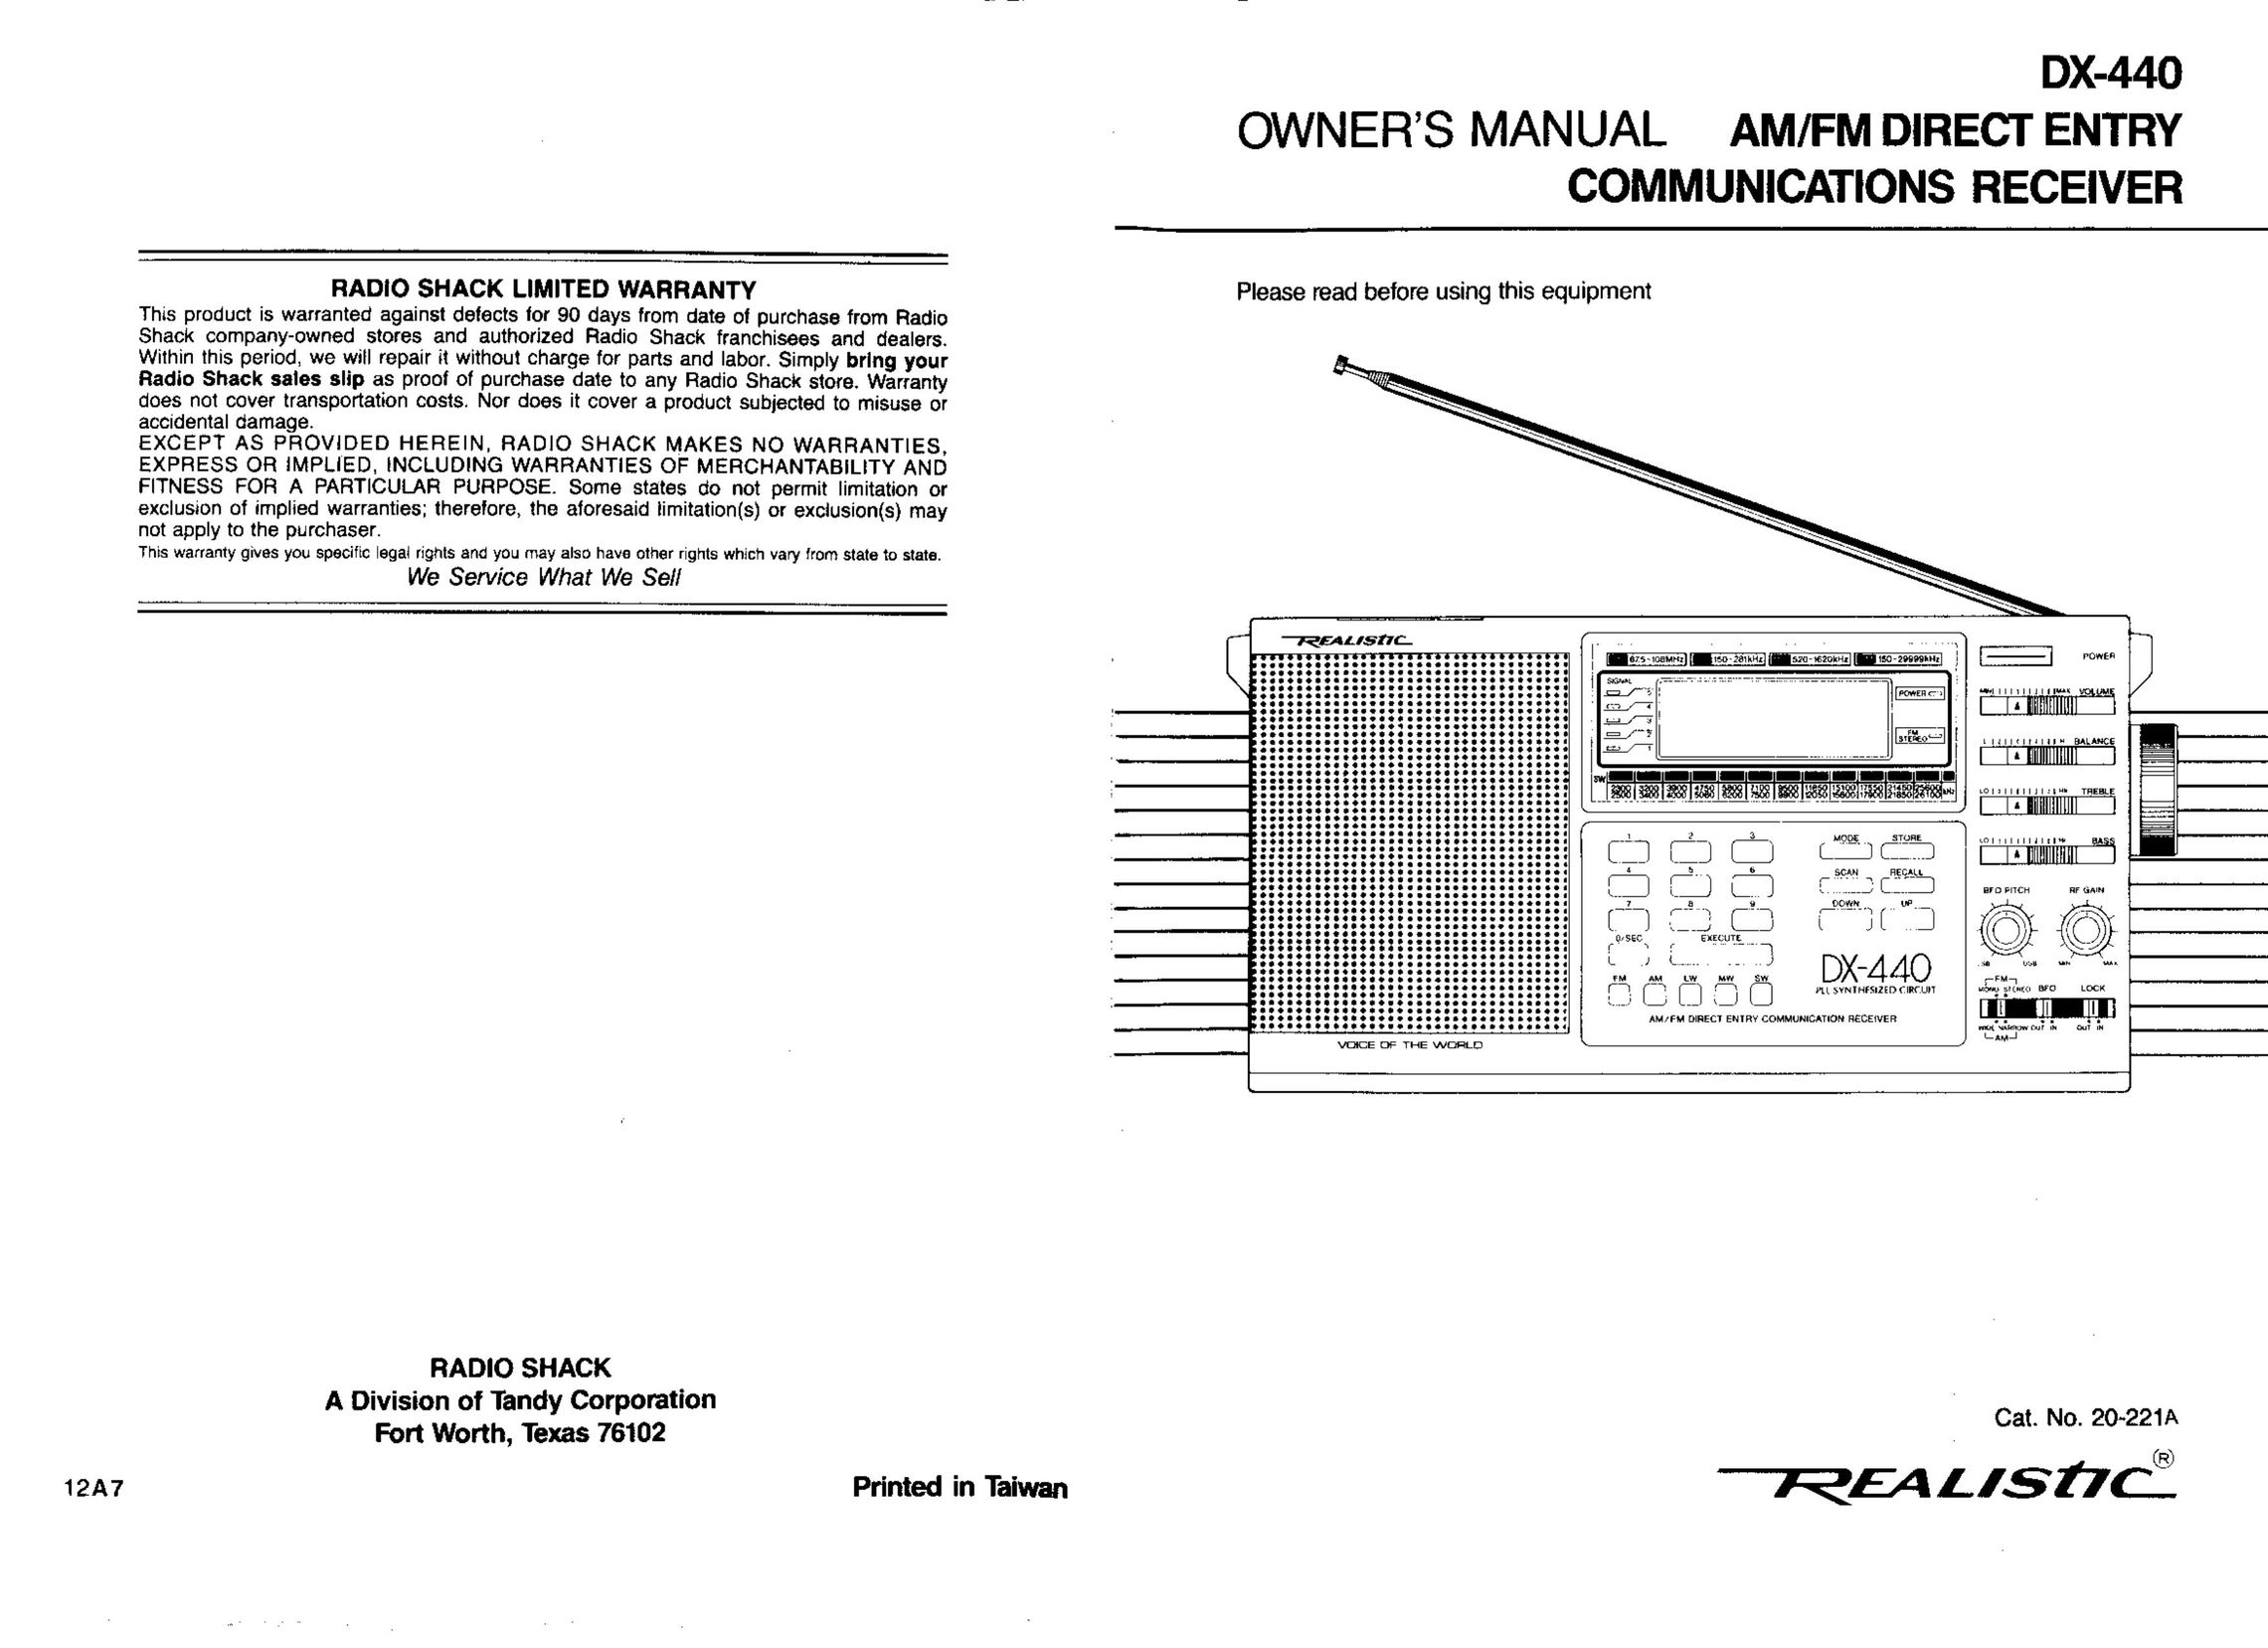 Realistic DX-440 Car Satellite Radio System User Manual